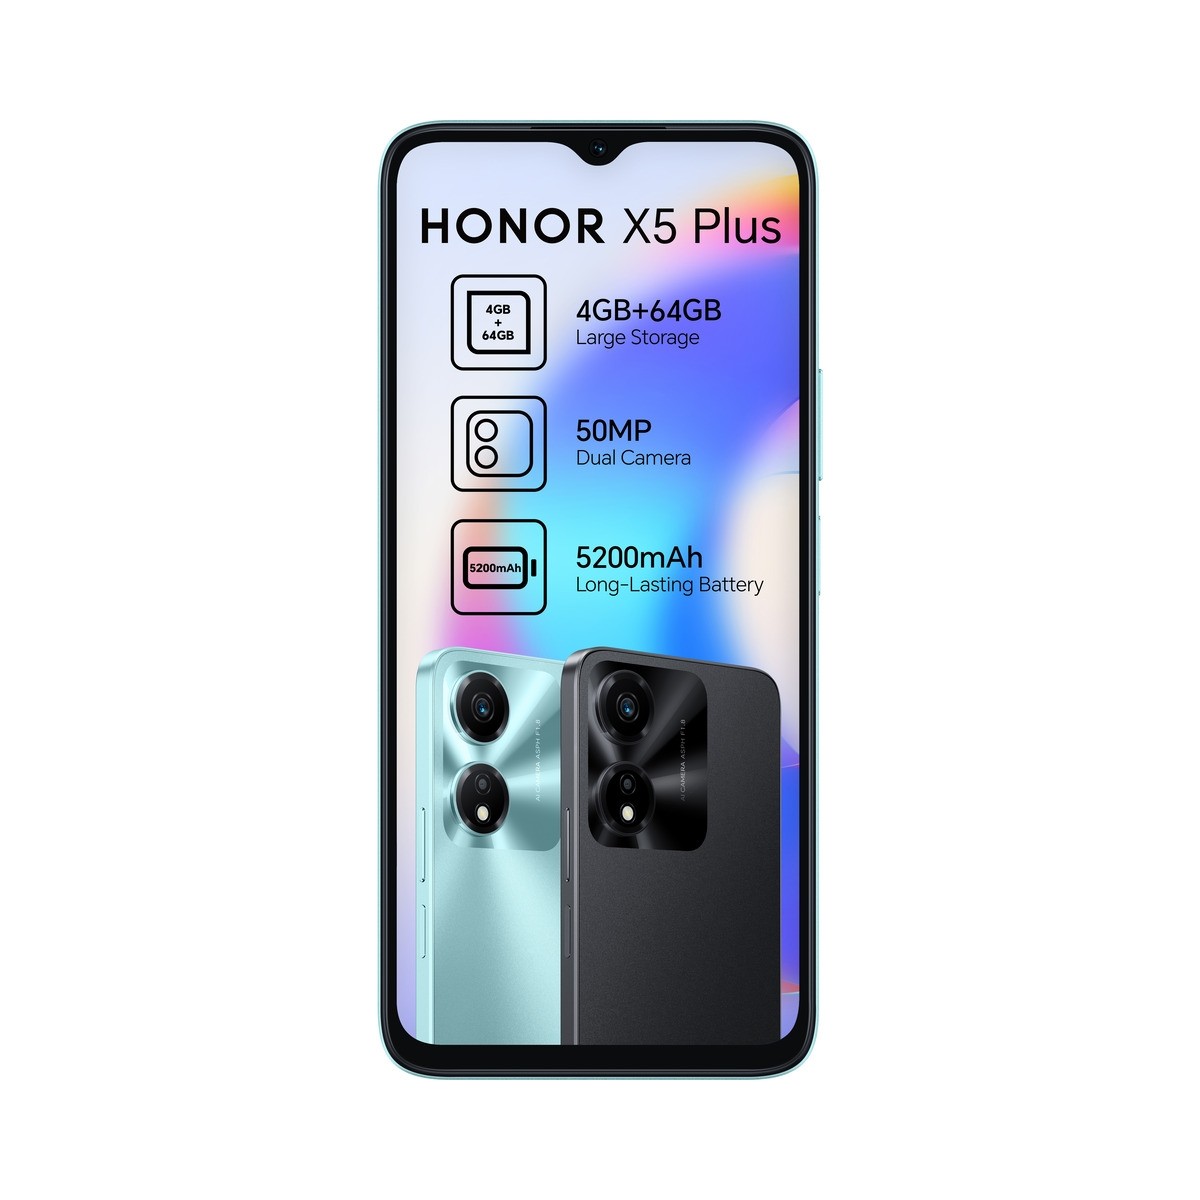 Honor X5 Plus (Telkom)